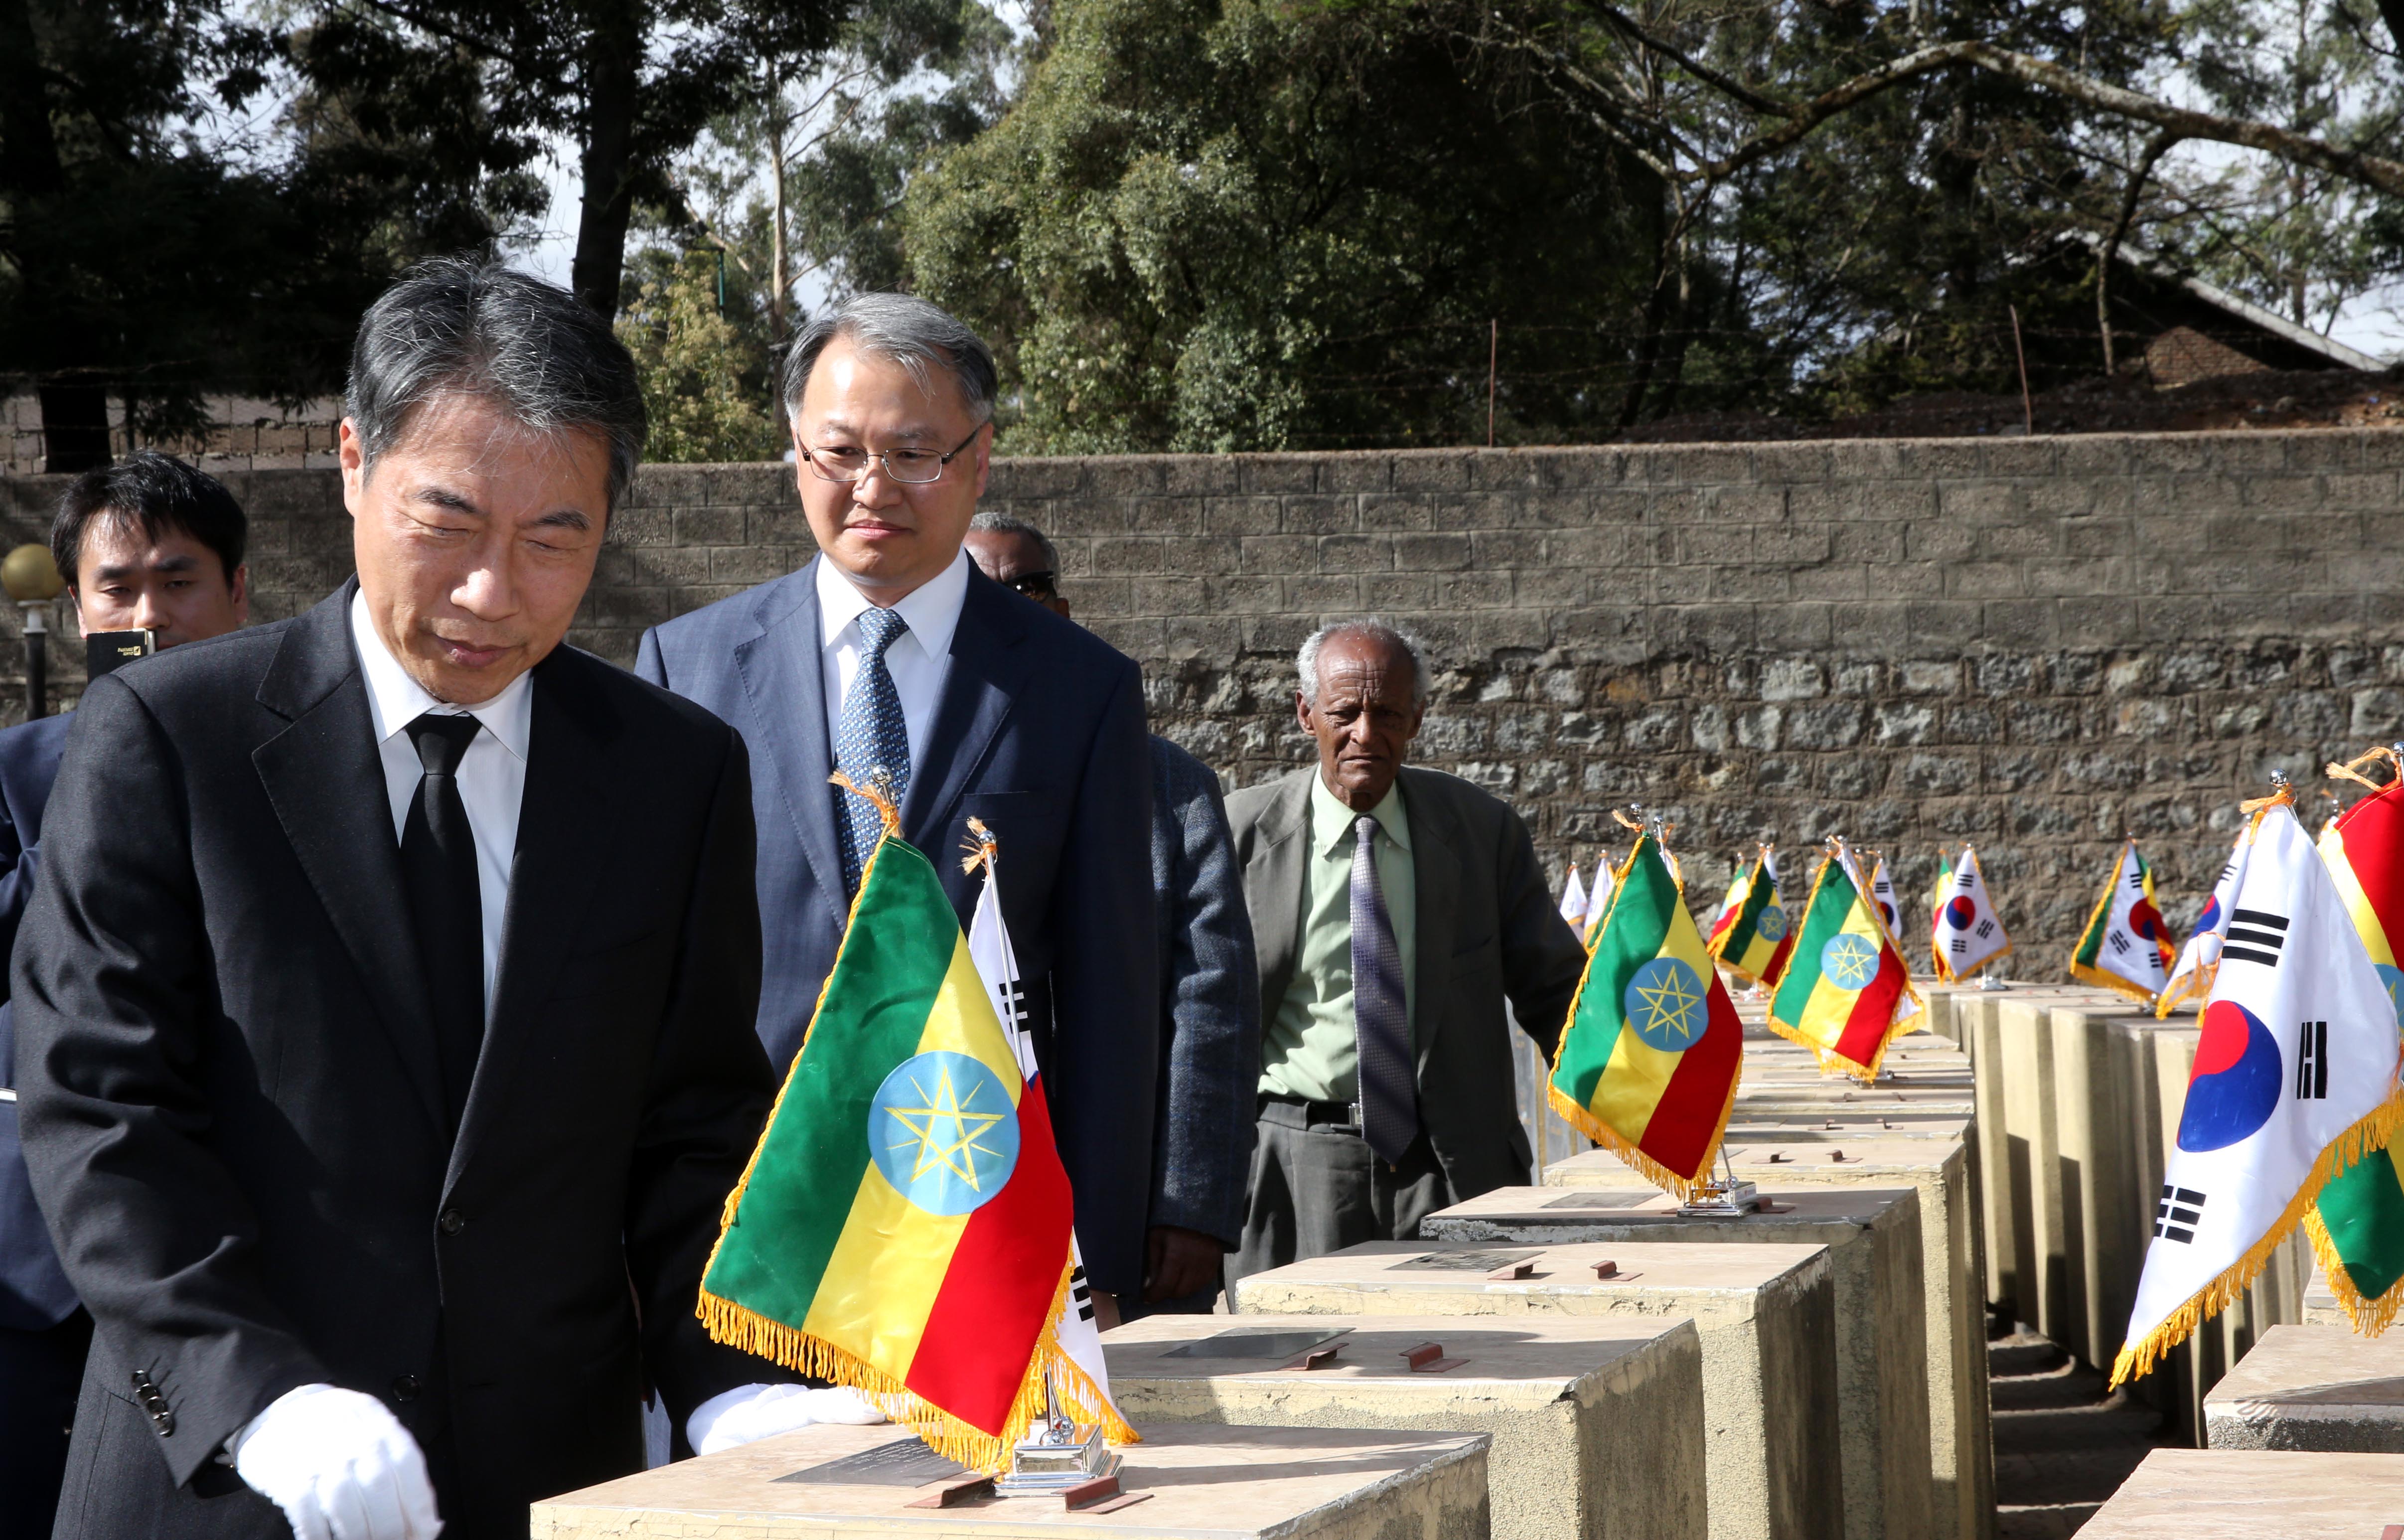 Minister Chong to Visit the Korean War Memorial in Ethiopia